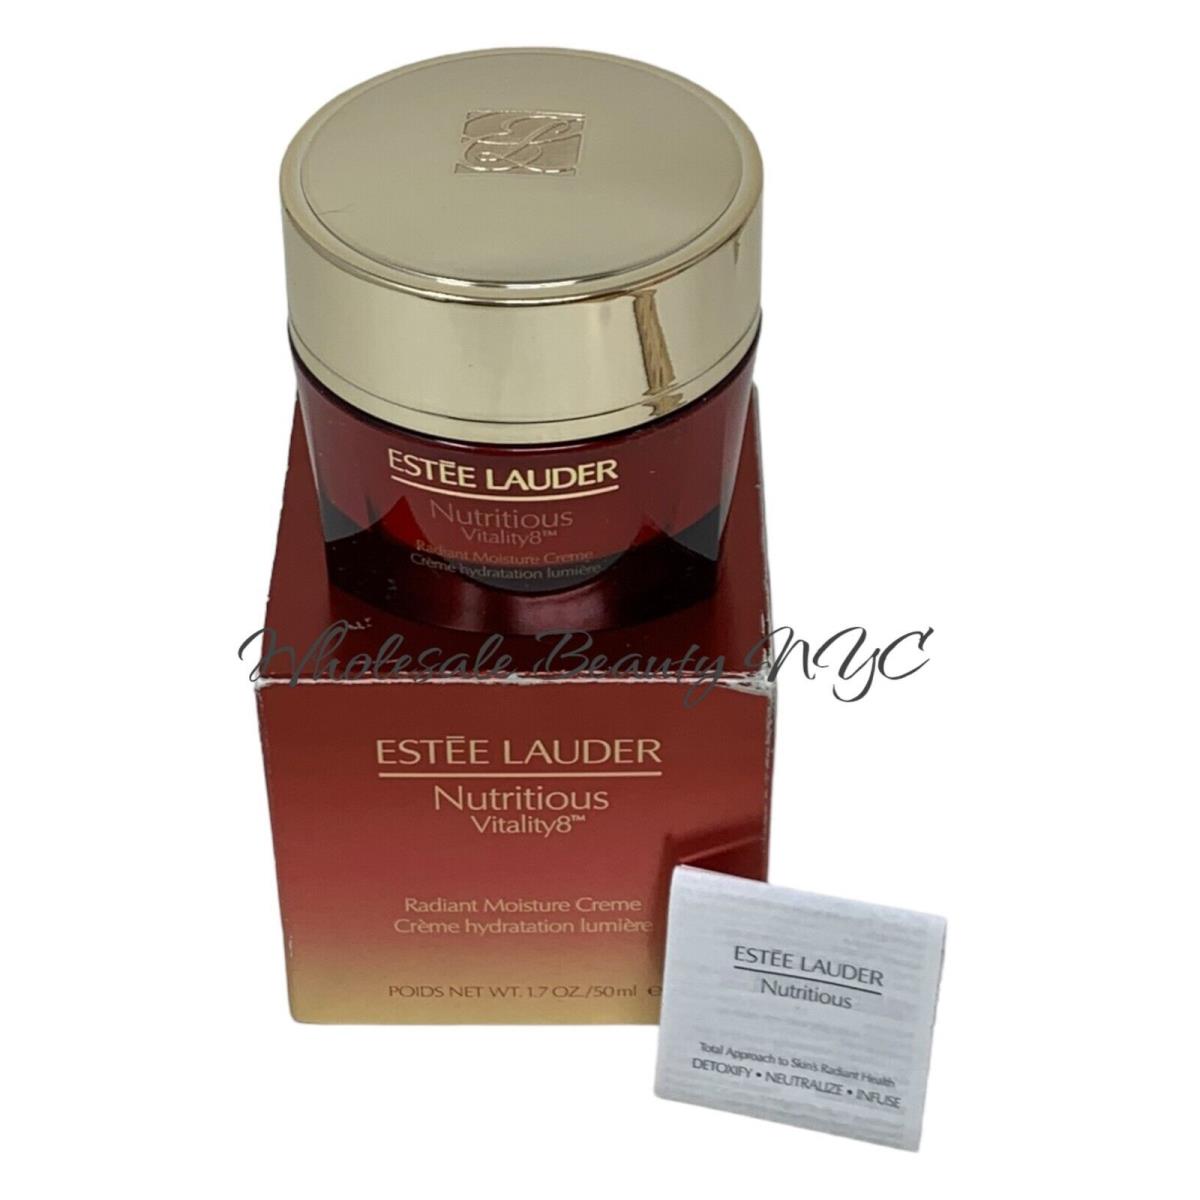 Estee Lauder Nutritious Vitality8 Radiant Moisture Creme 1.7 Oz/50 ml